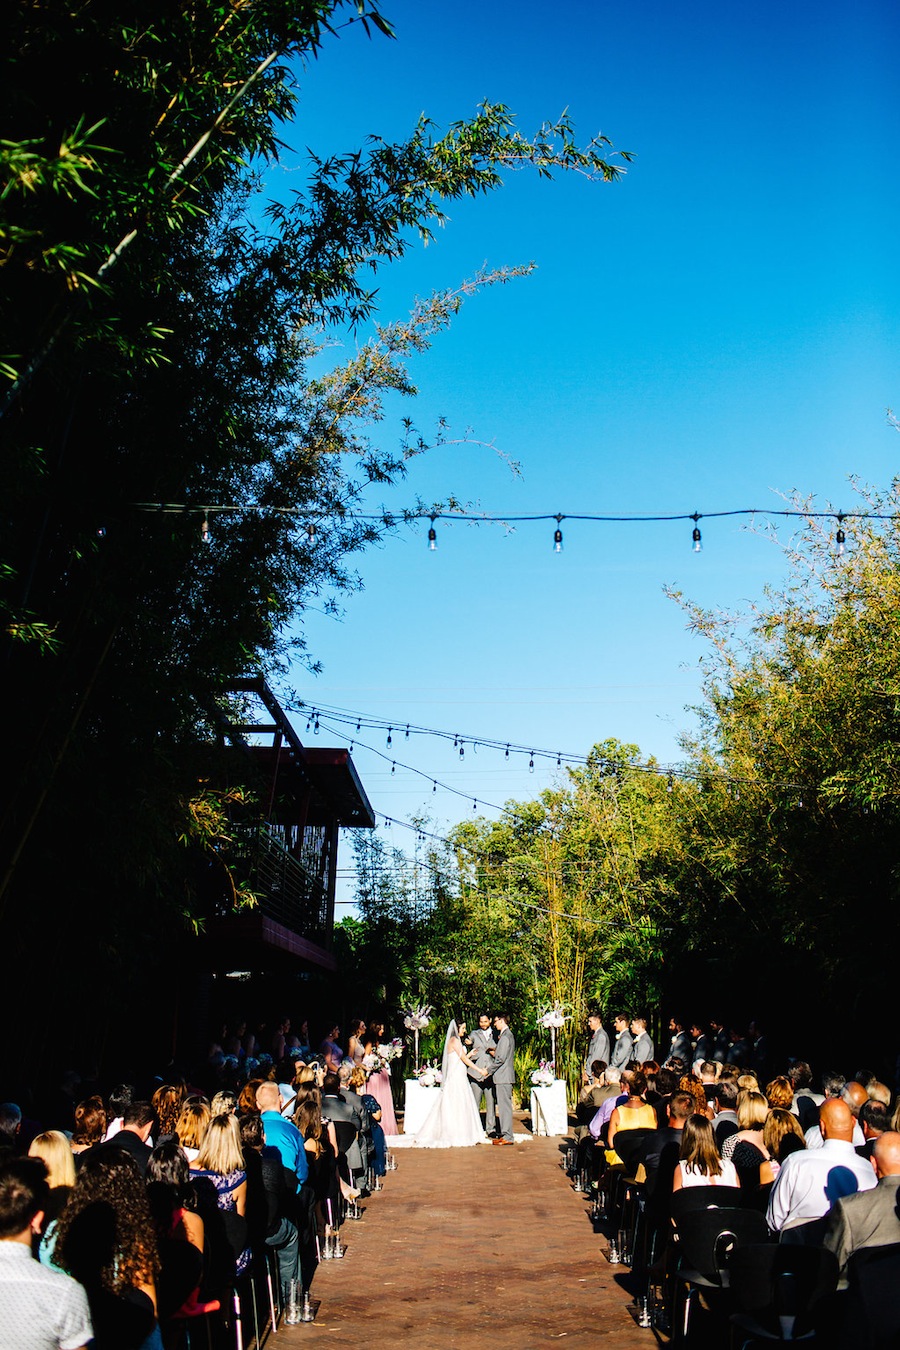 Downtown St. Pete Outdoor Wedding Ceremony Venue | NOVA 535 Bamboo Garden